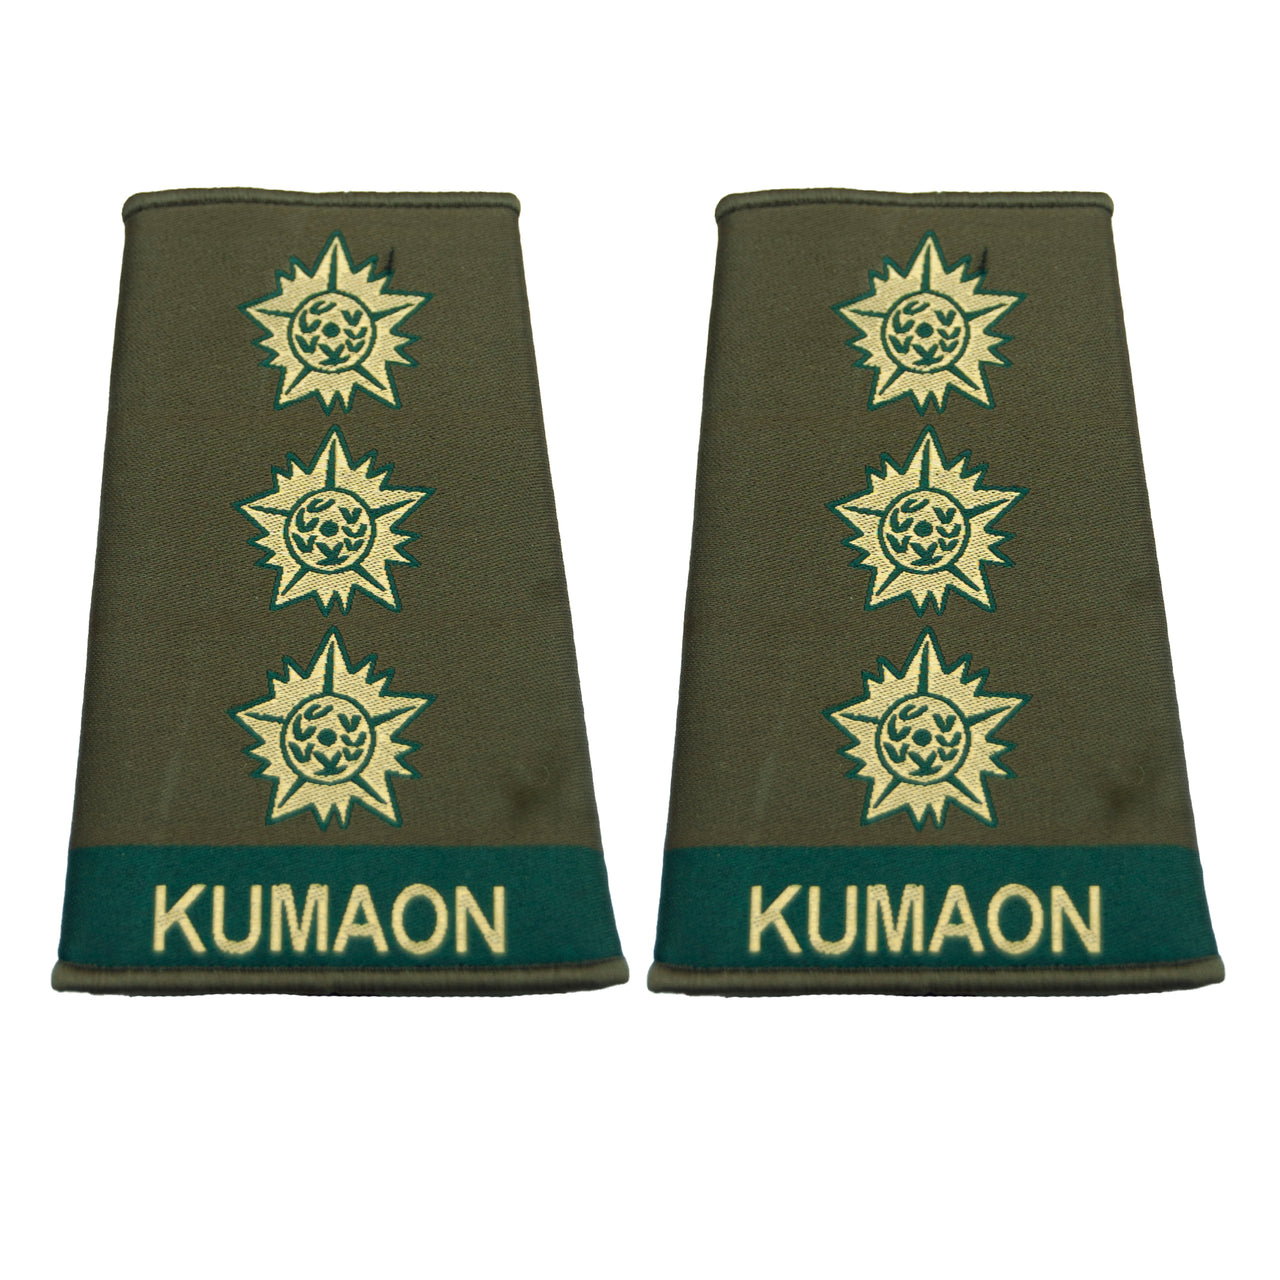 Indian Army Rank Epaulettes - Kumaon Regiment